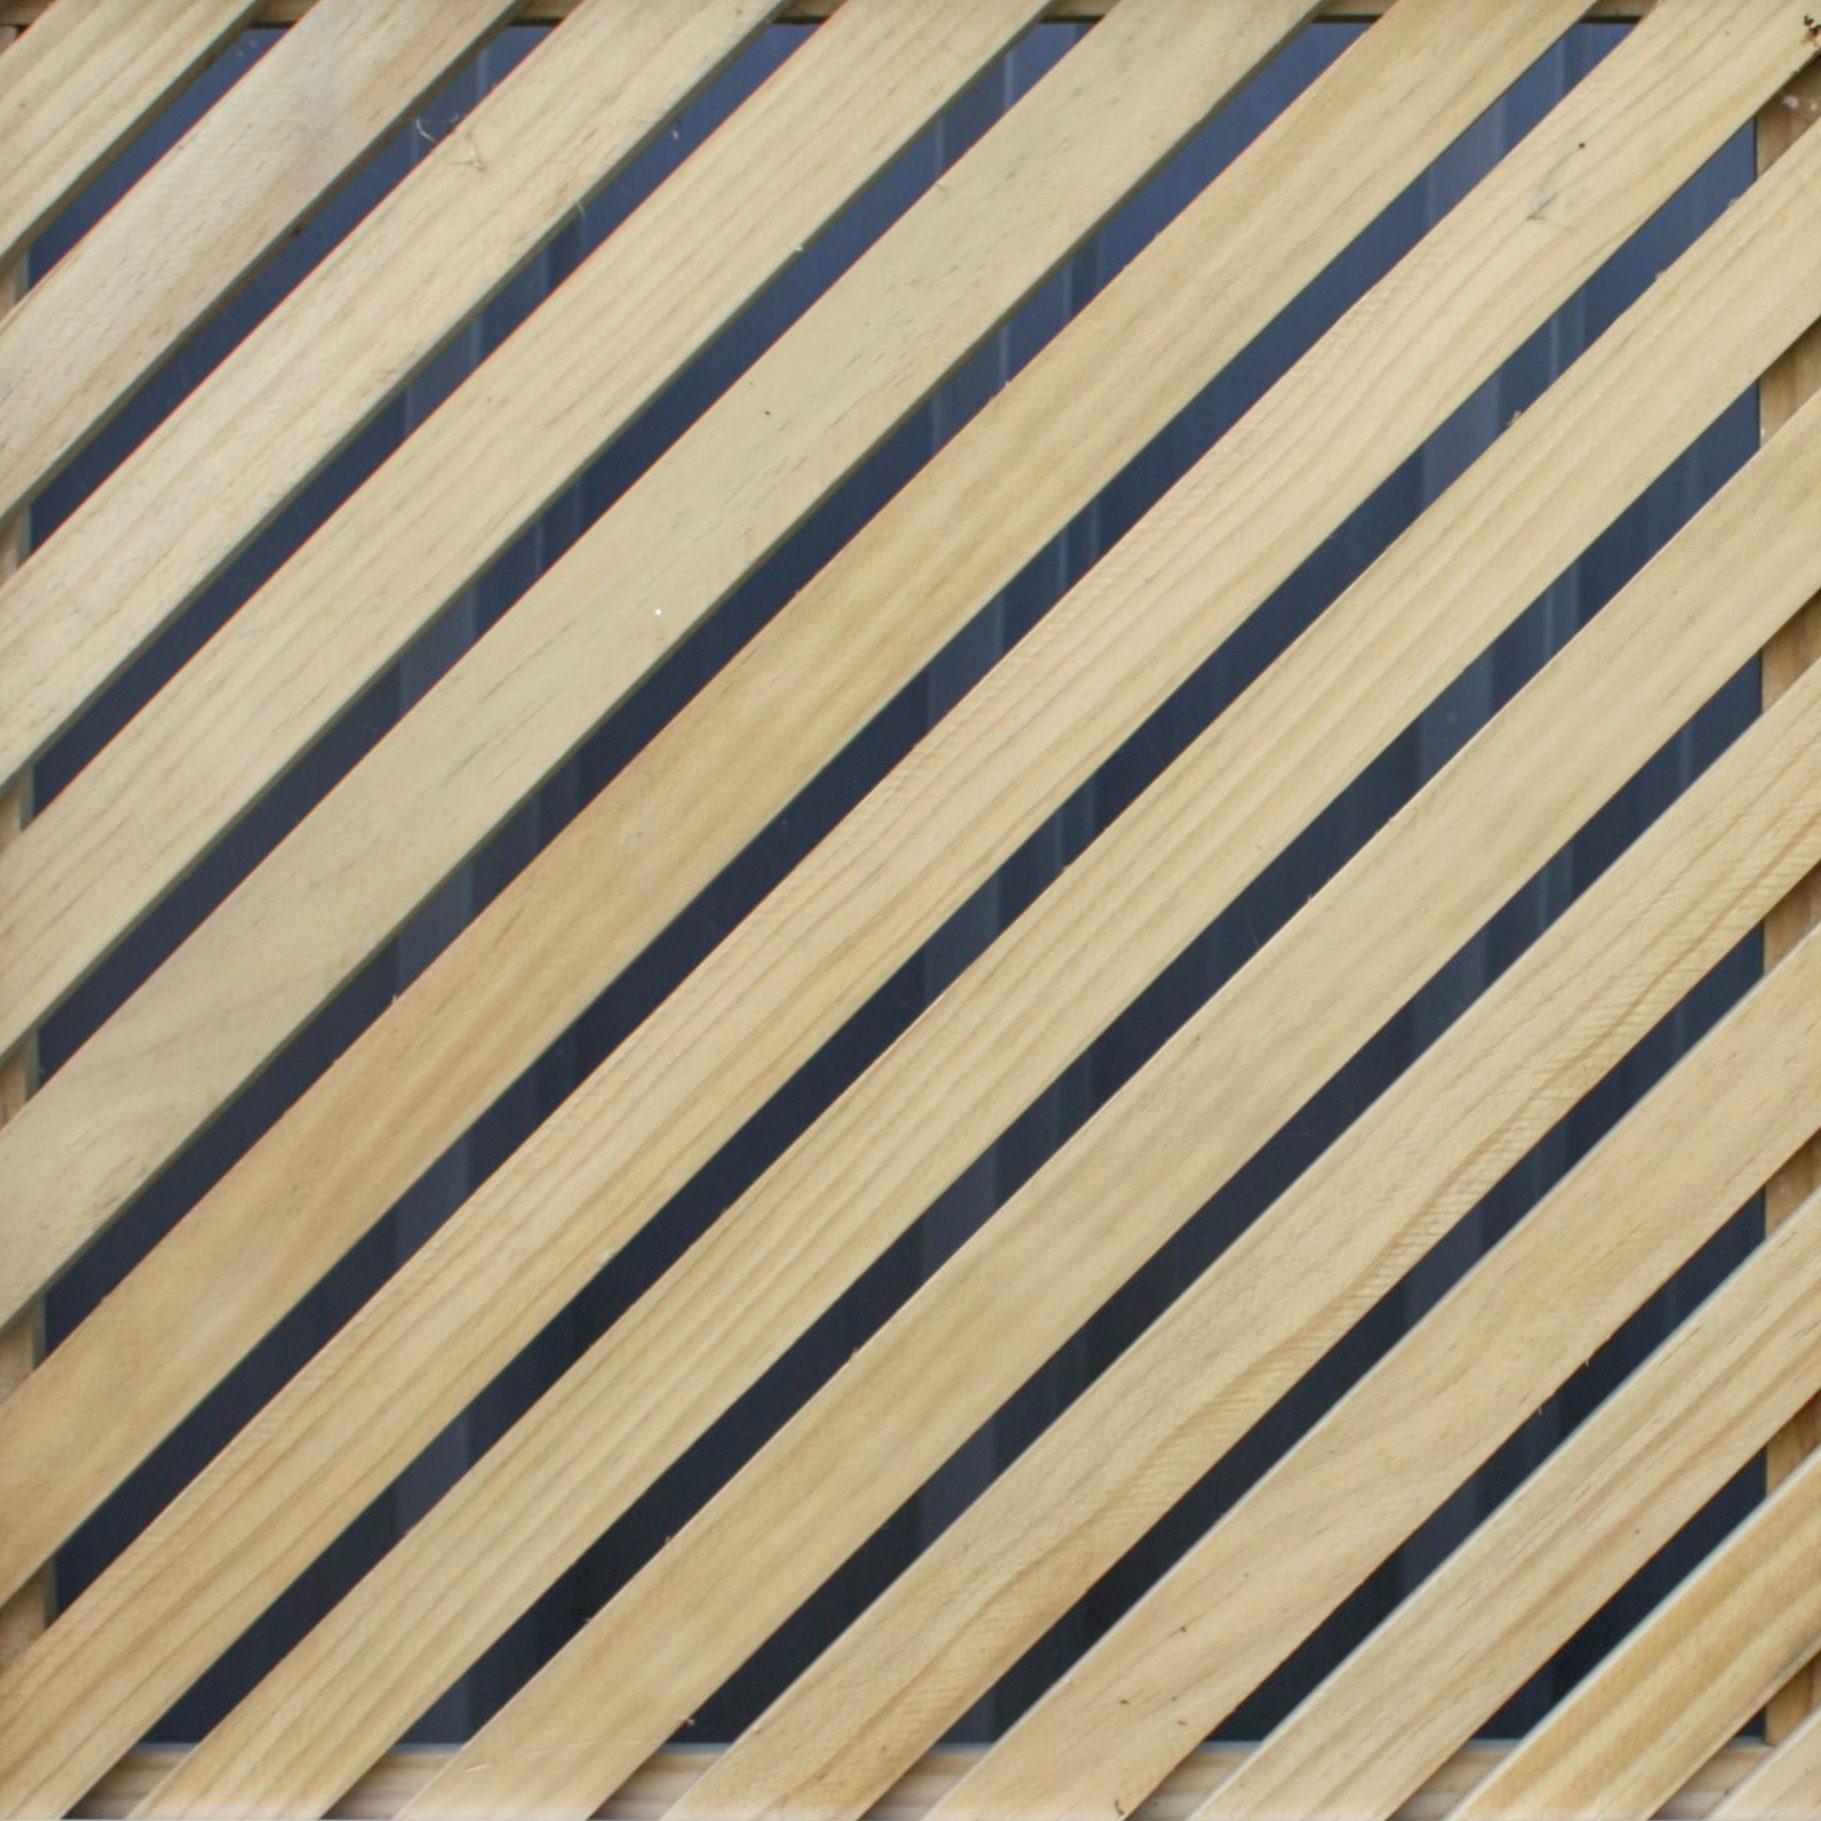 An image of a 10mm Diagonal Oriental design.